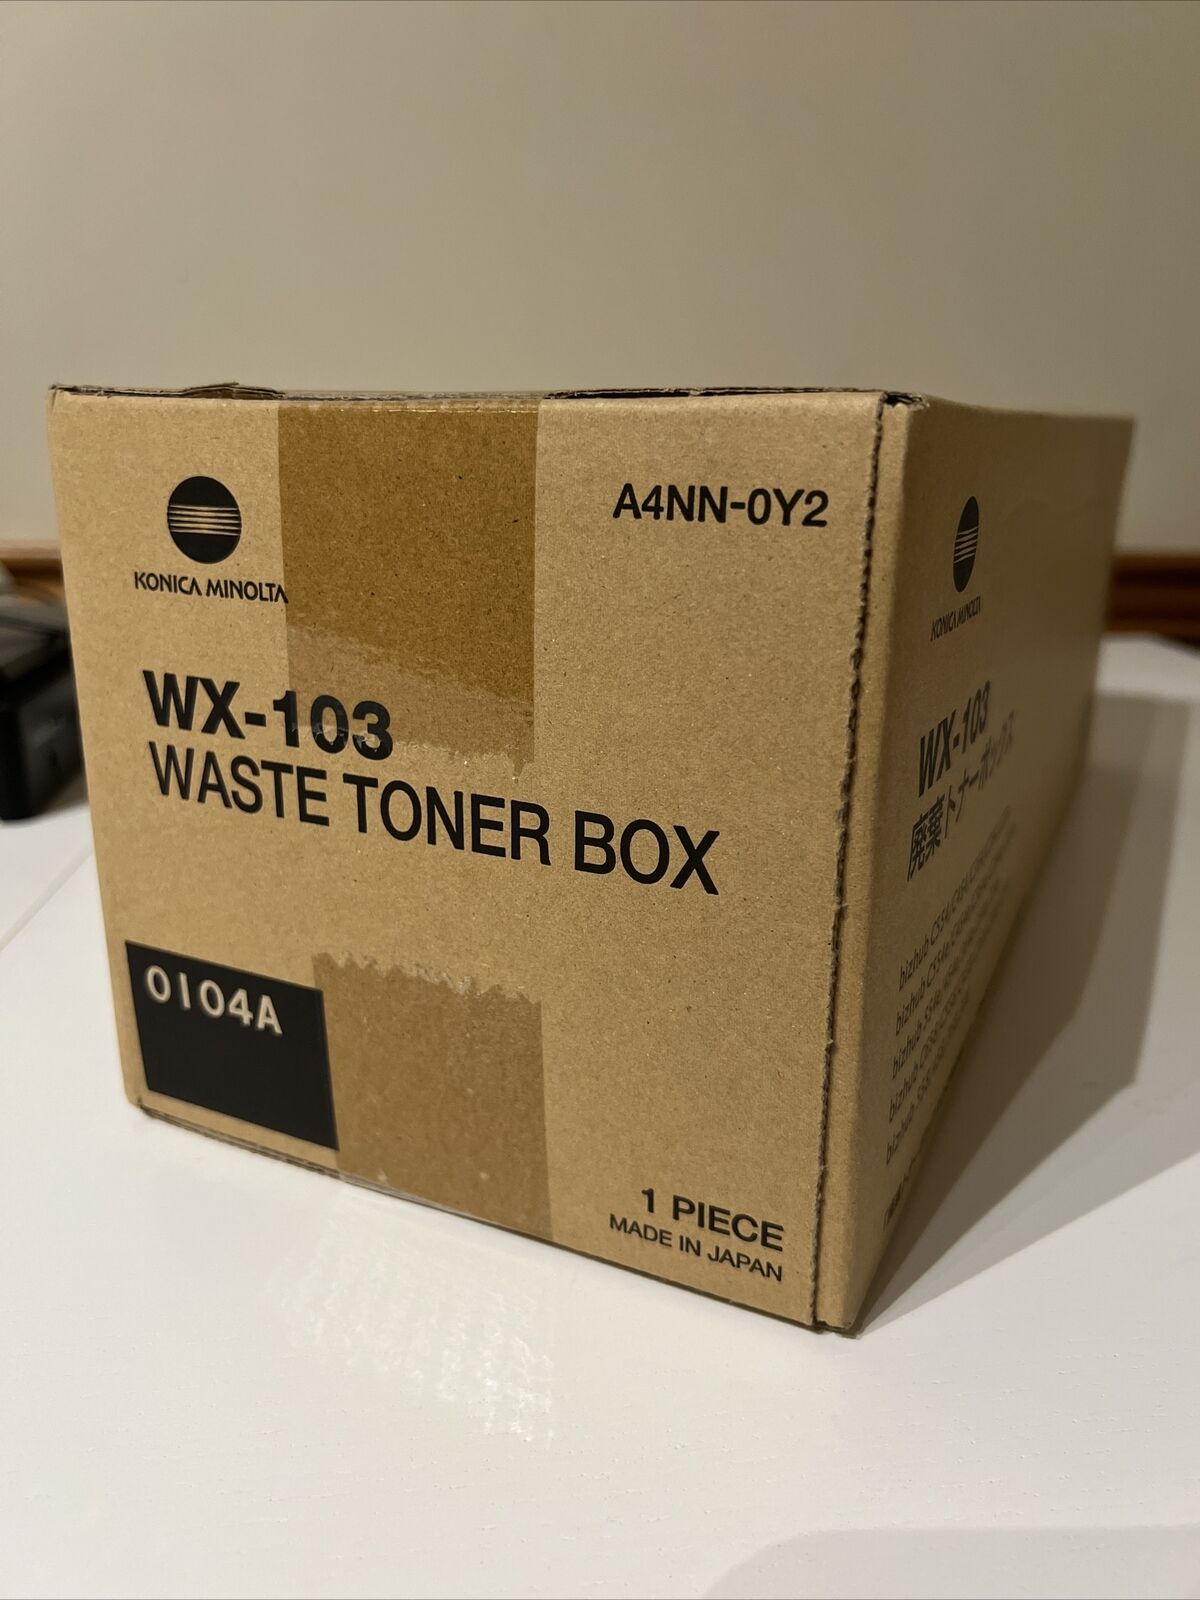 Genuine Konica Minolta WX-103 (A4NN-WY3) Waste Toner Box For BizHub Printers